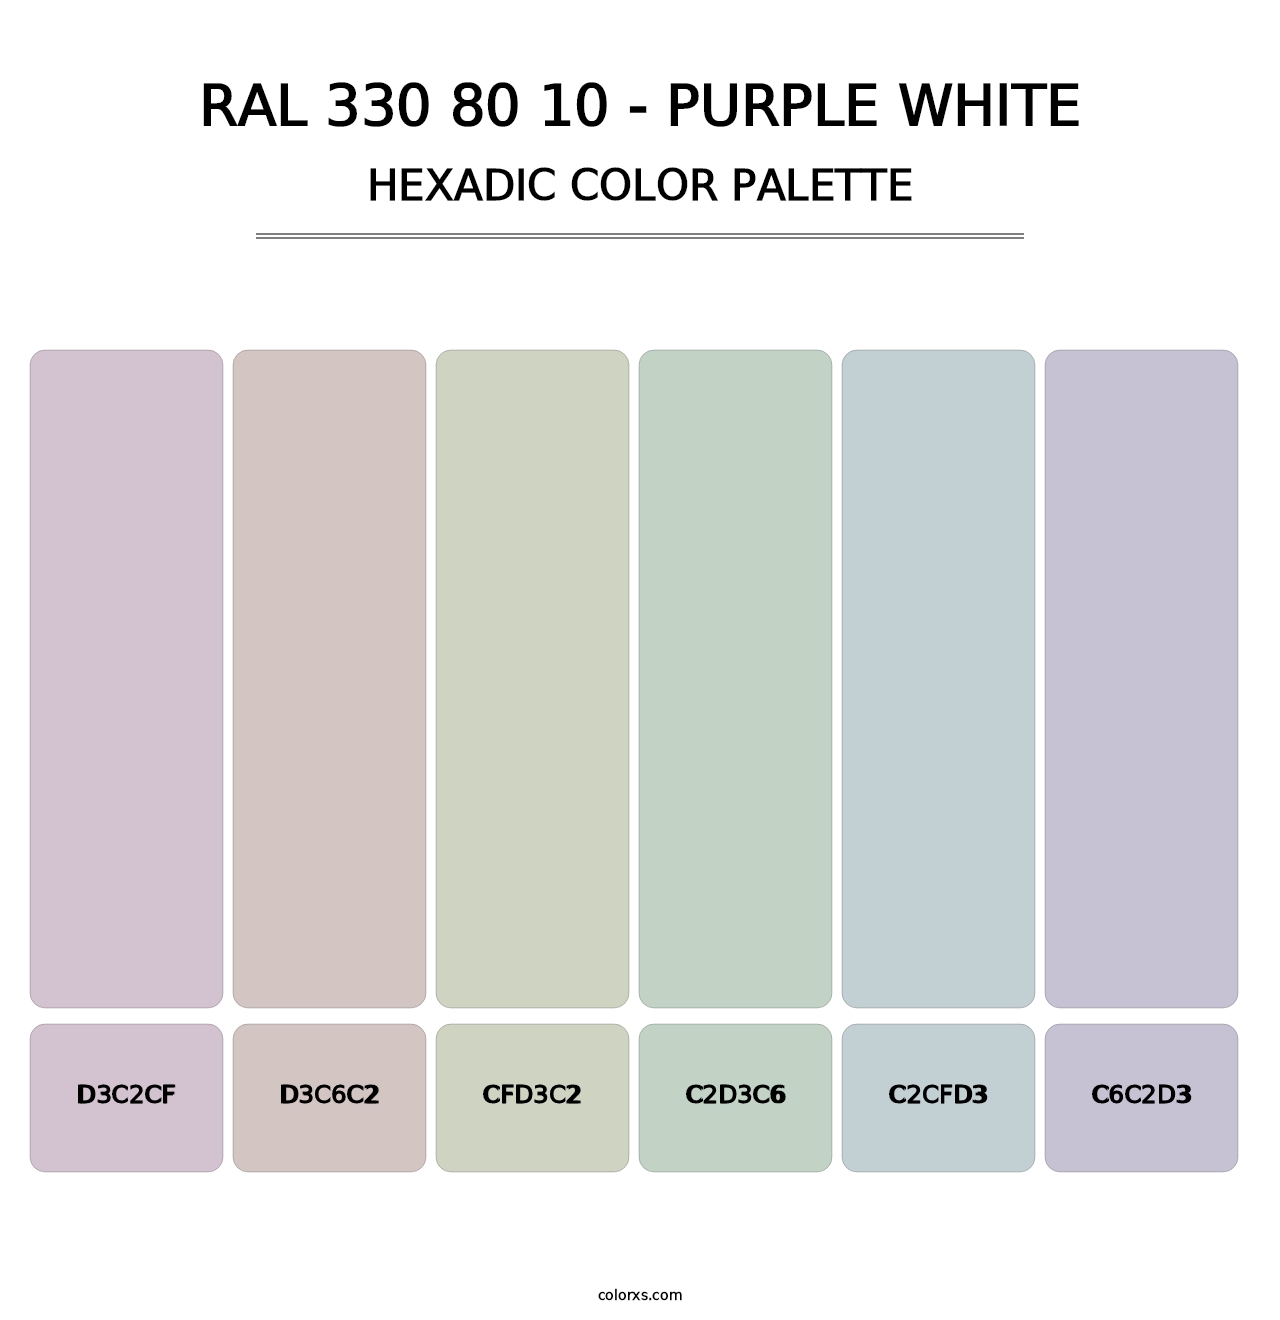 RAL 330 80 10 - Purple White - Hexadic Color Palette